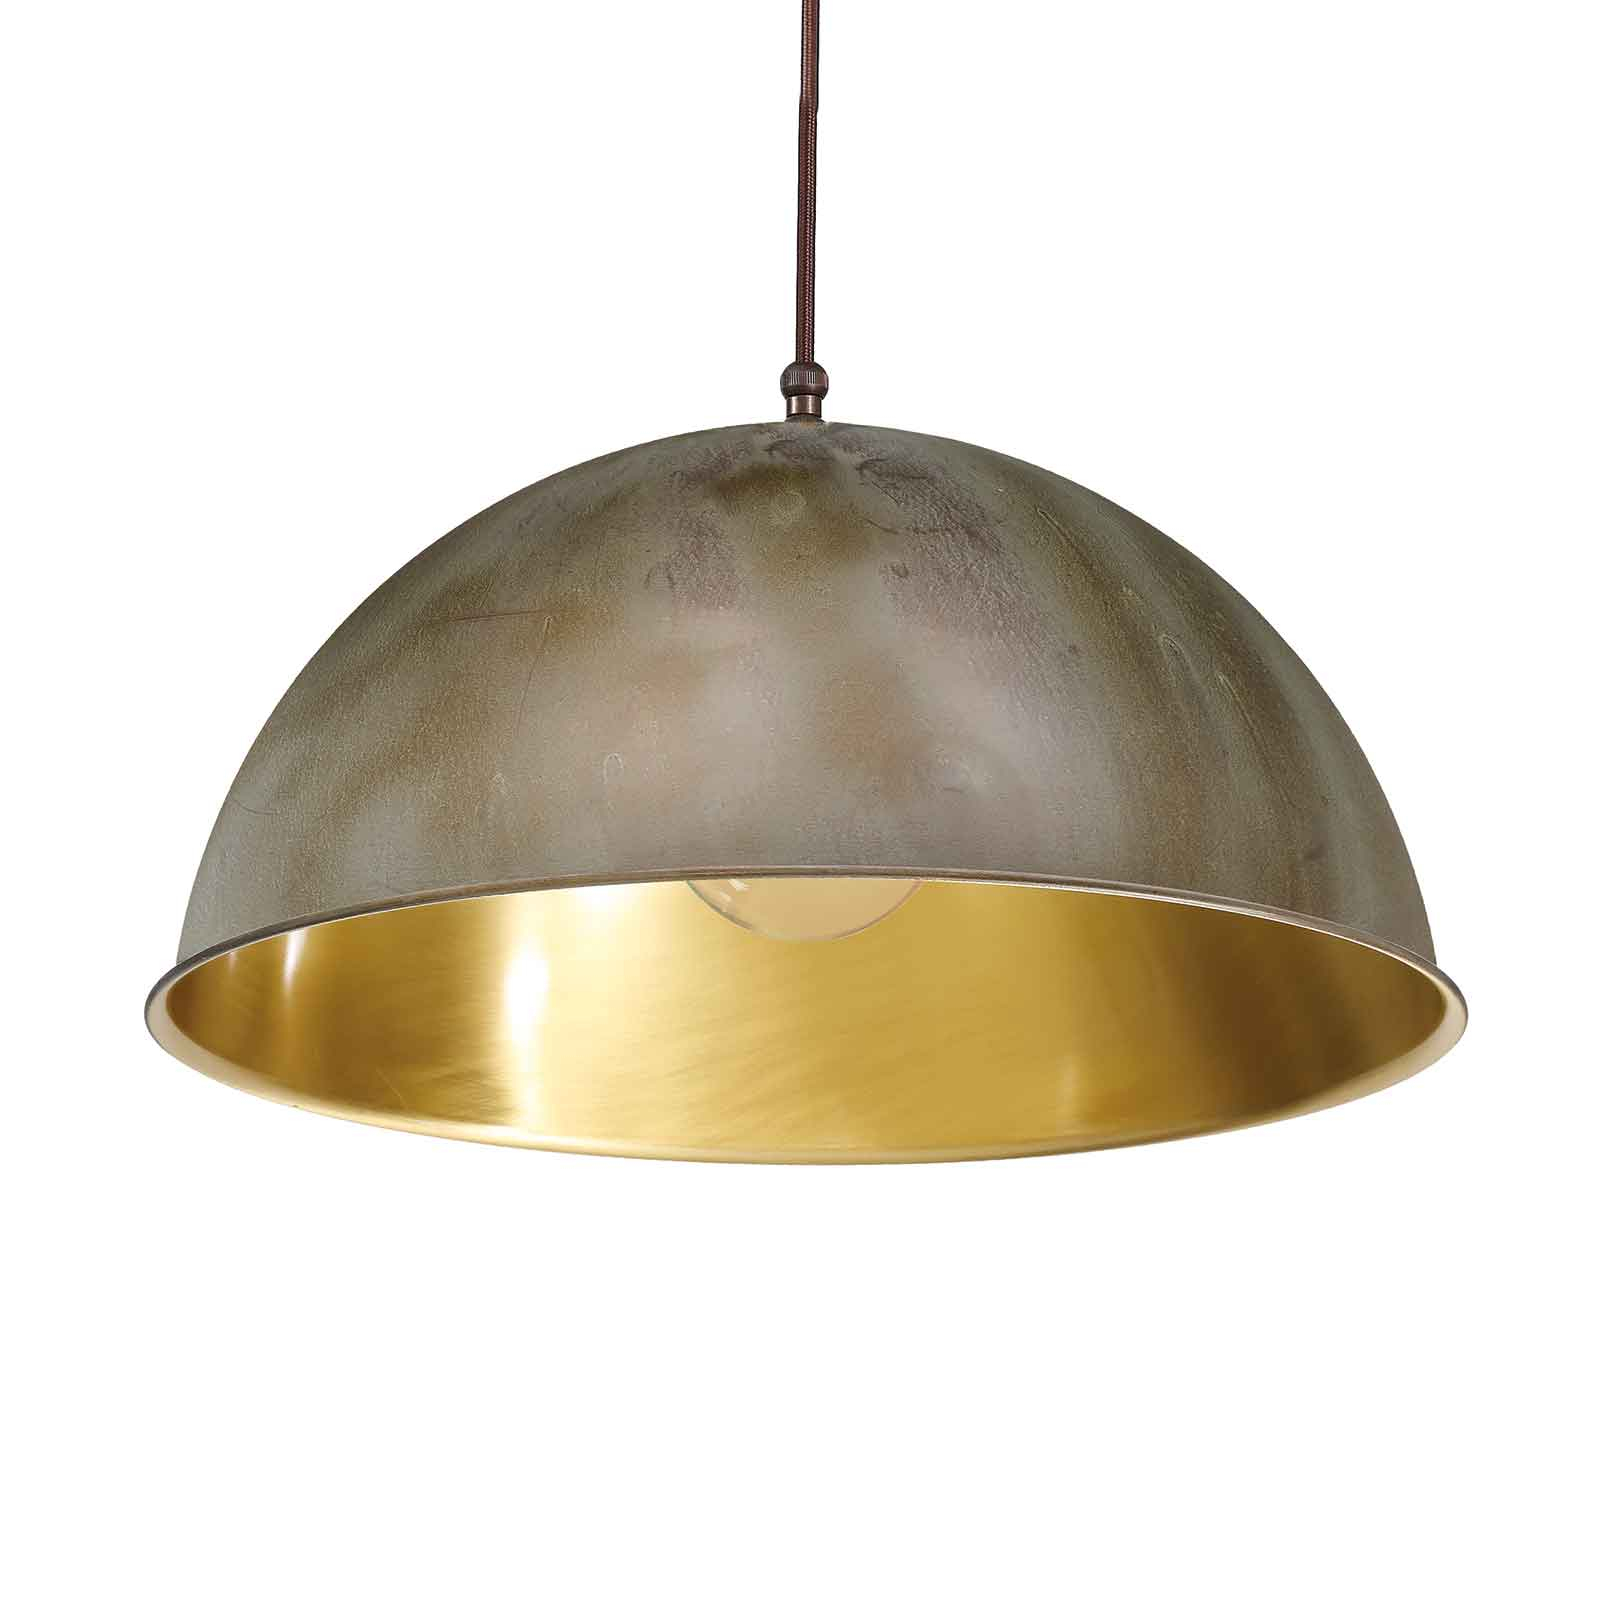 Viseće svjetlo Krug zlato / antikni mesing, Ø30cm